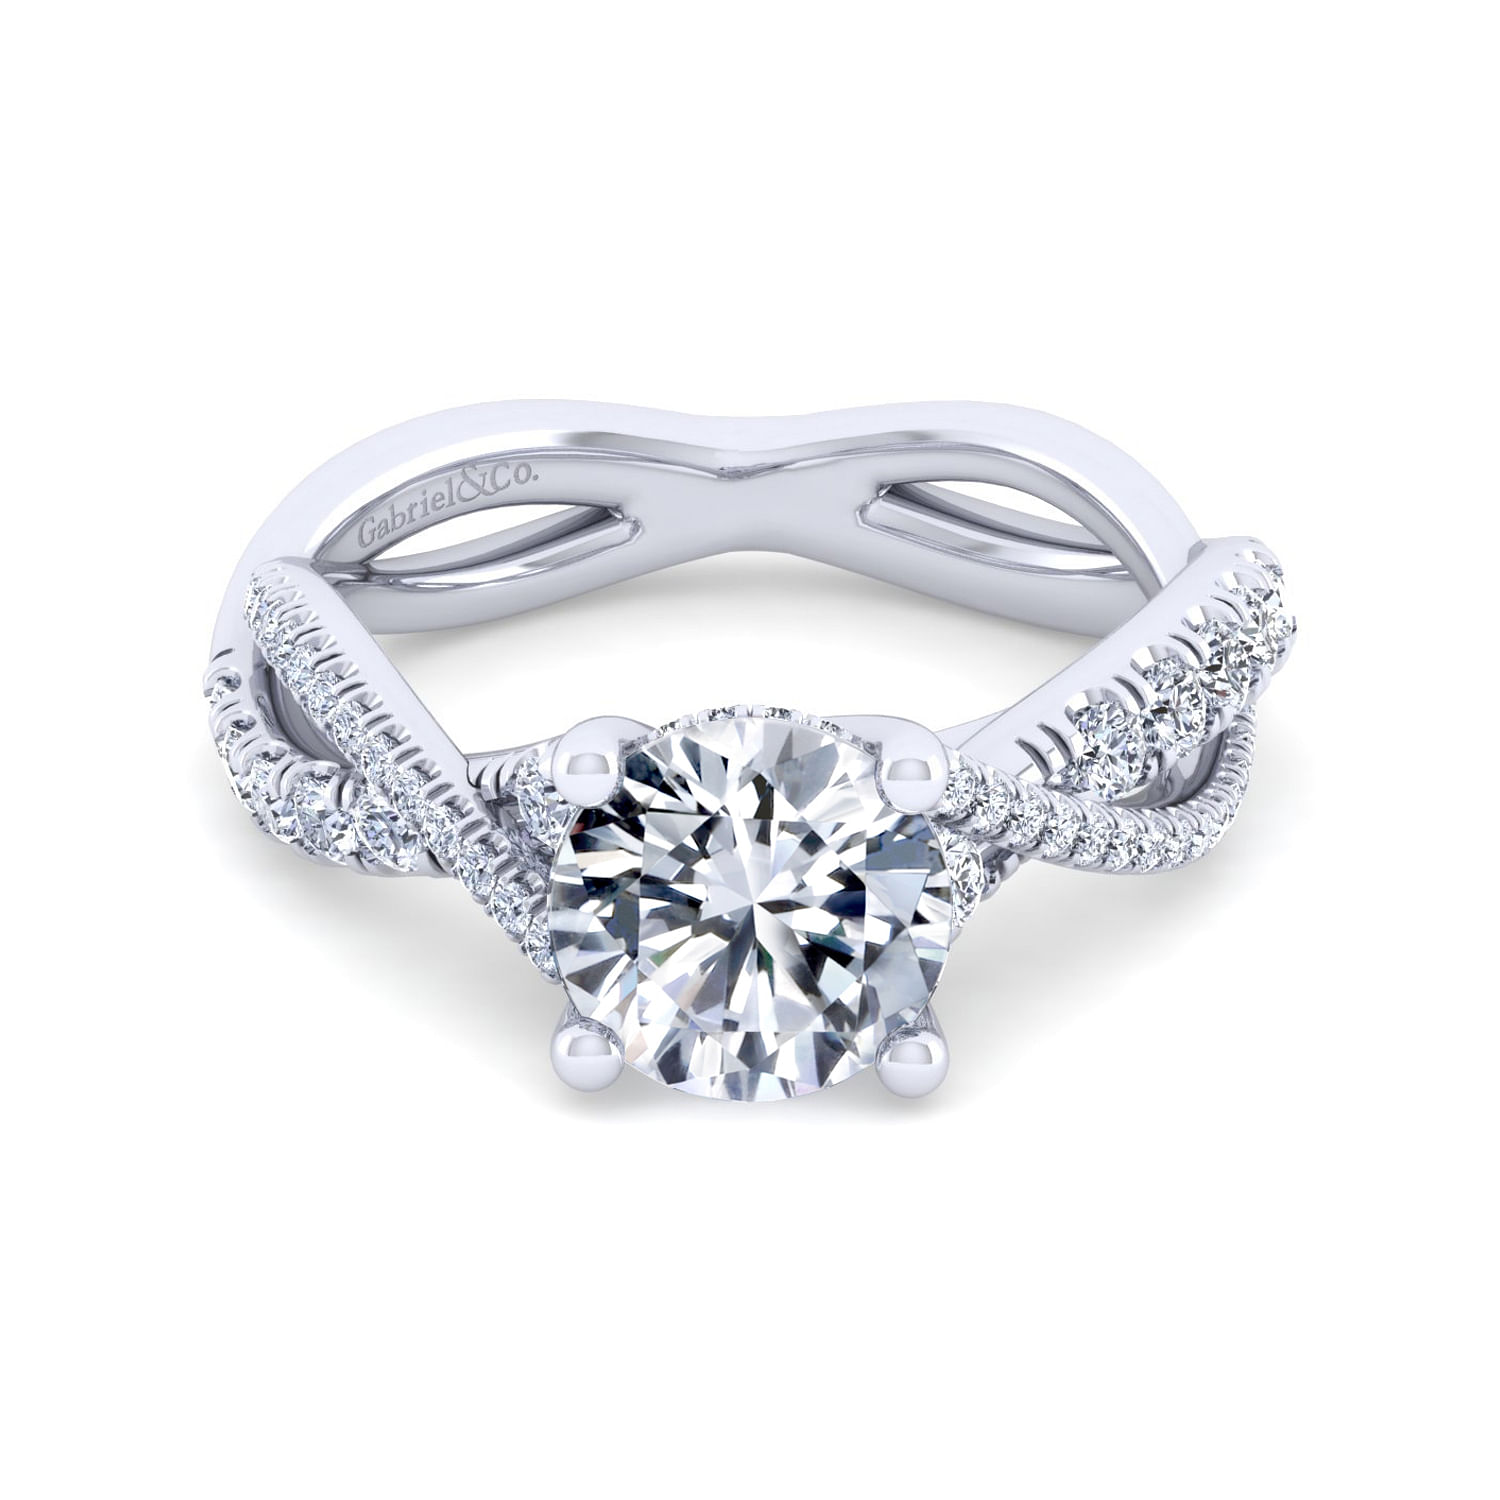 Gabriel - 14K White Gold Twisted Round Diamond Engagement Ring